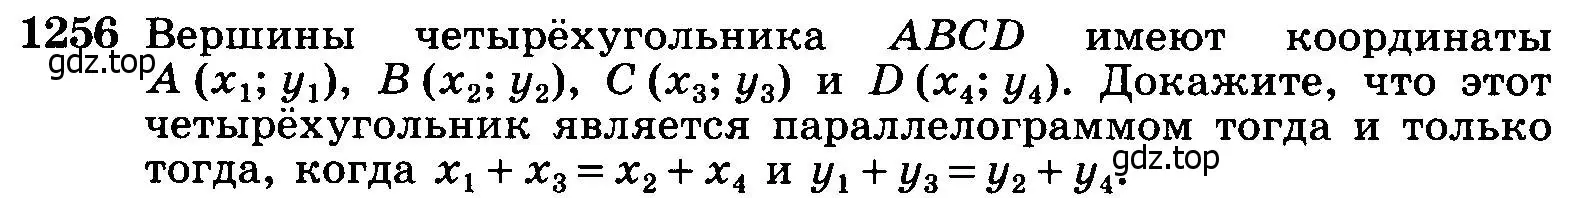 Условие номер 1256 (страница 330) гдз по геометрии 7-9 класс Атанасян, Бутузов, учебник